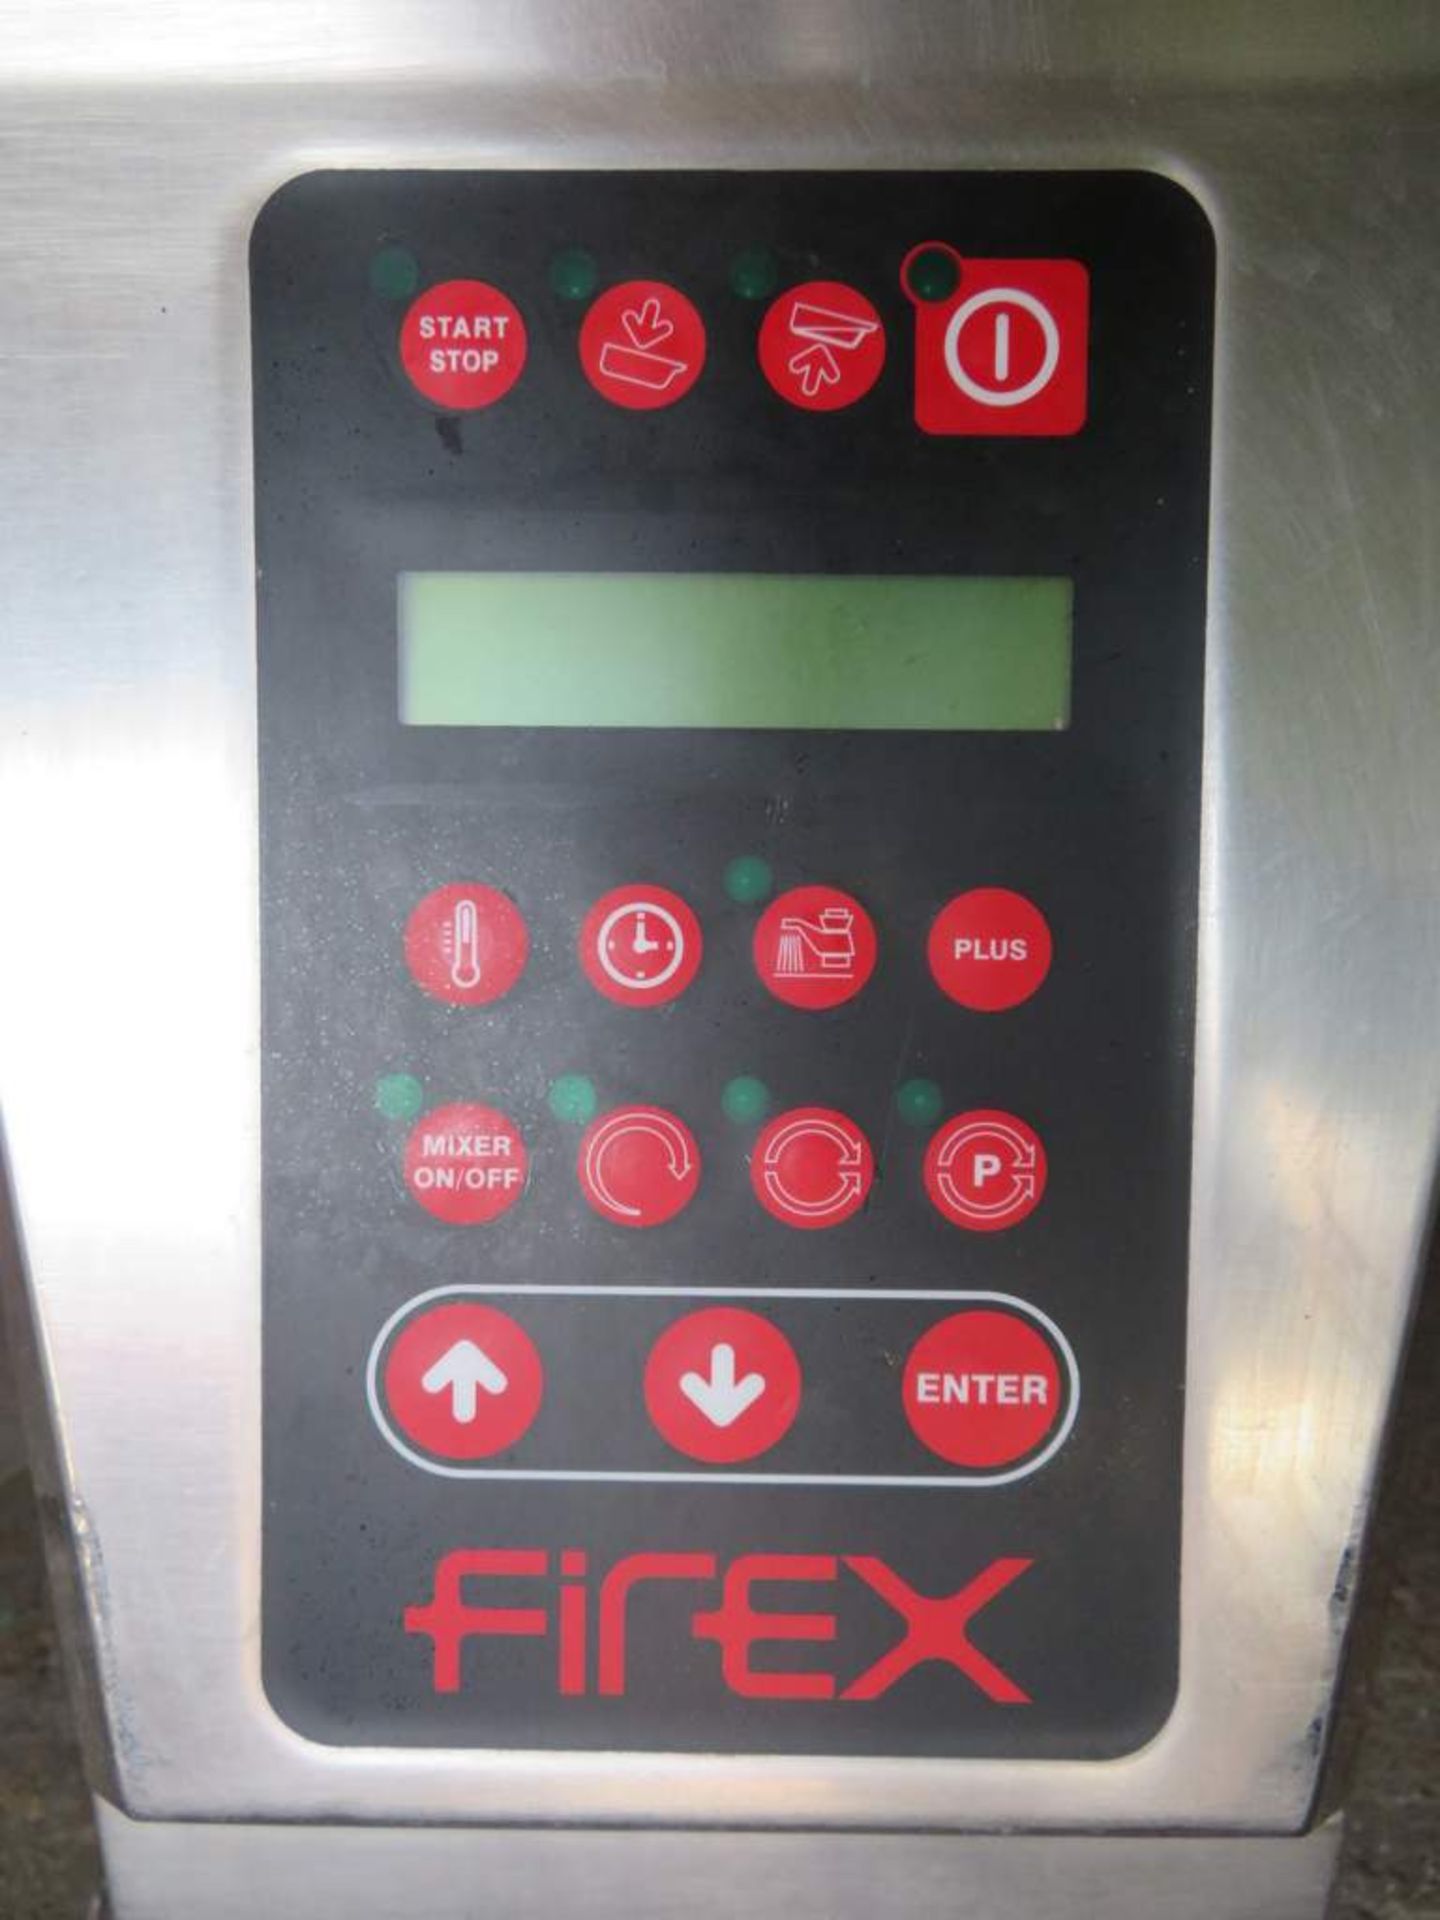 Firex Direct gas heating tilting brazing pan - Image 3 of 5